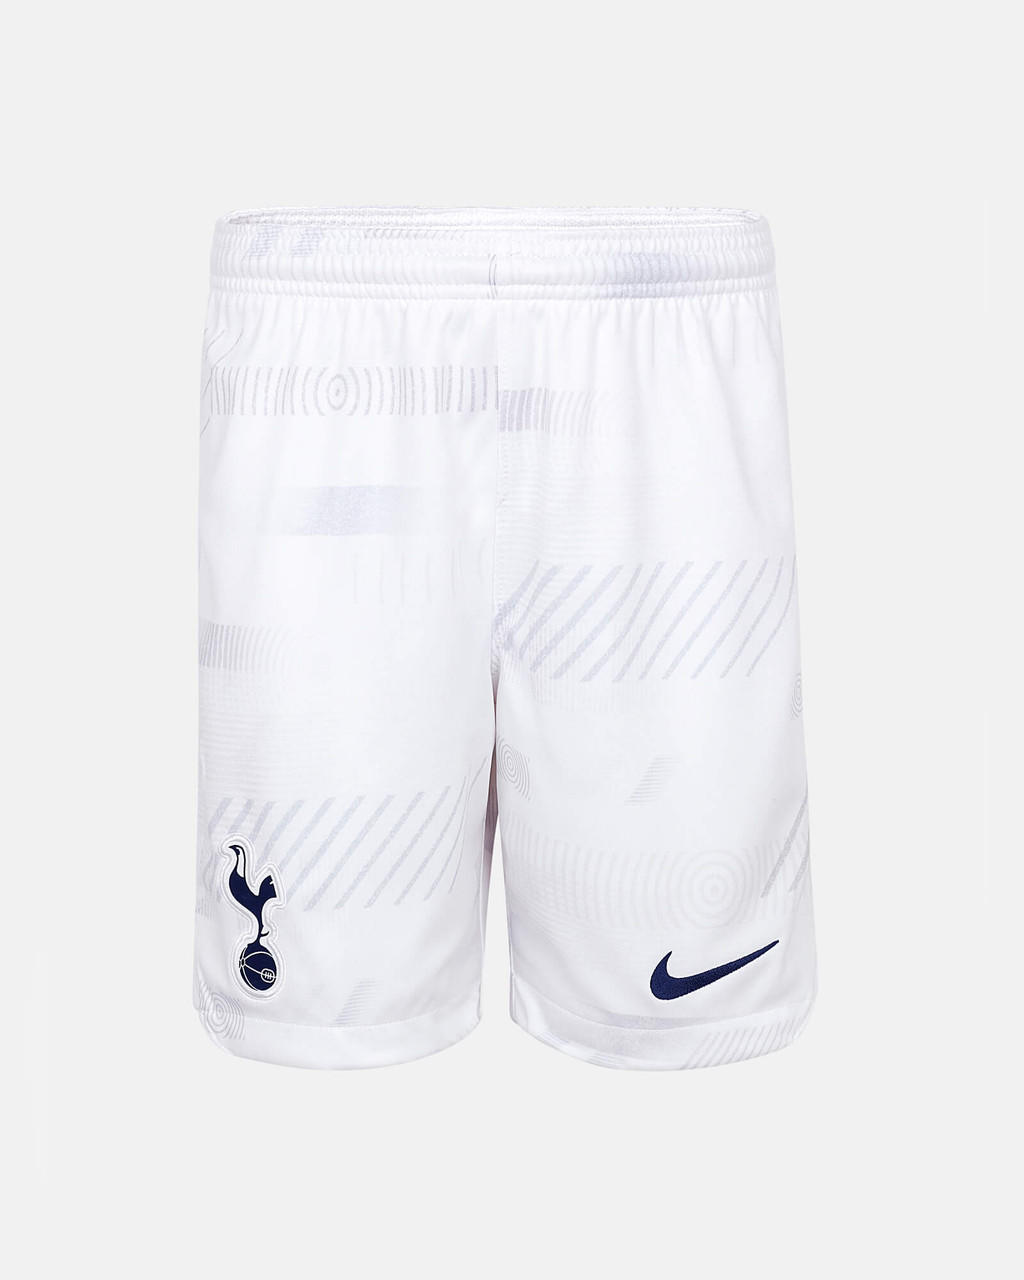 Tottenham Hotspur Staduim Away Jersey Shorts Set 10 Youth Size 22